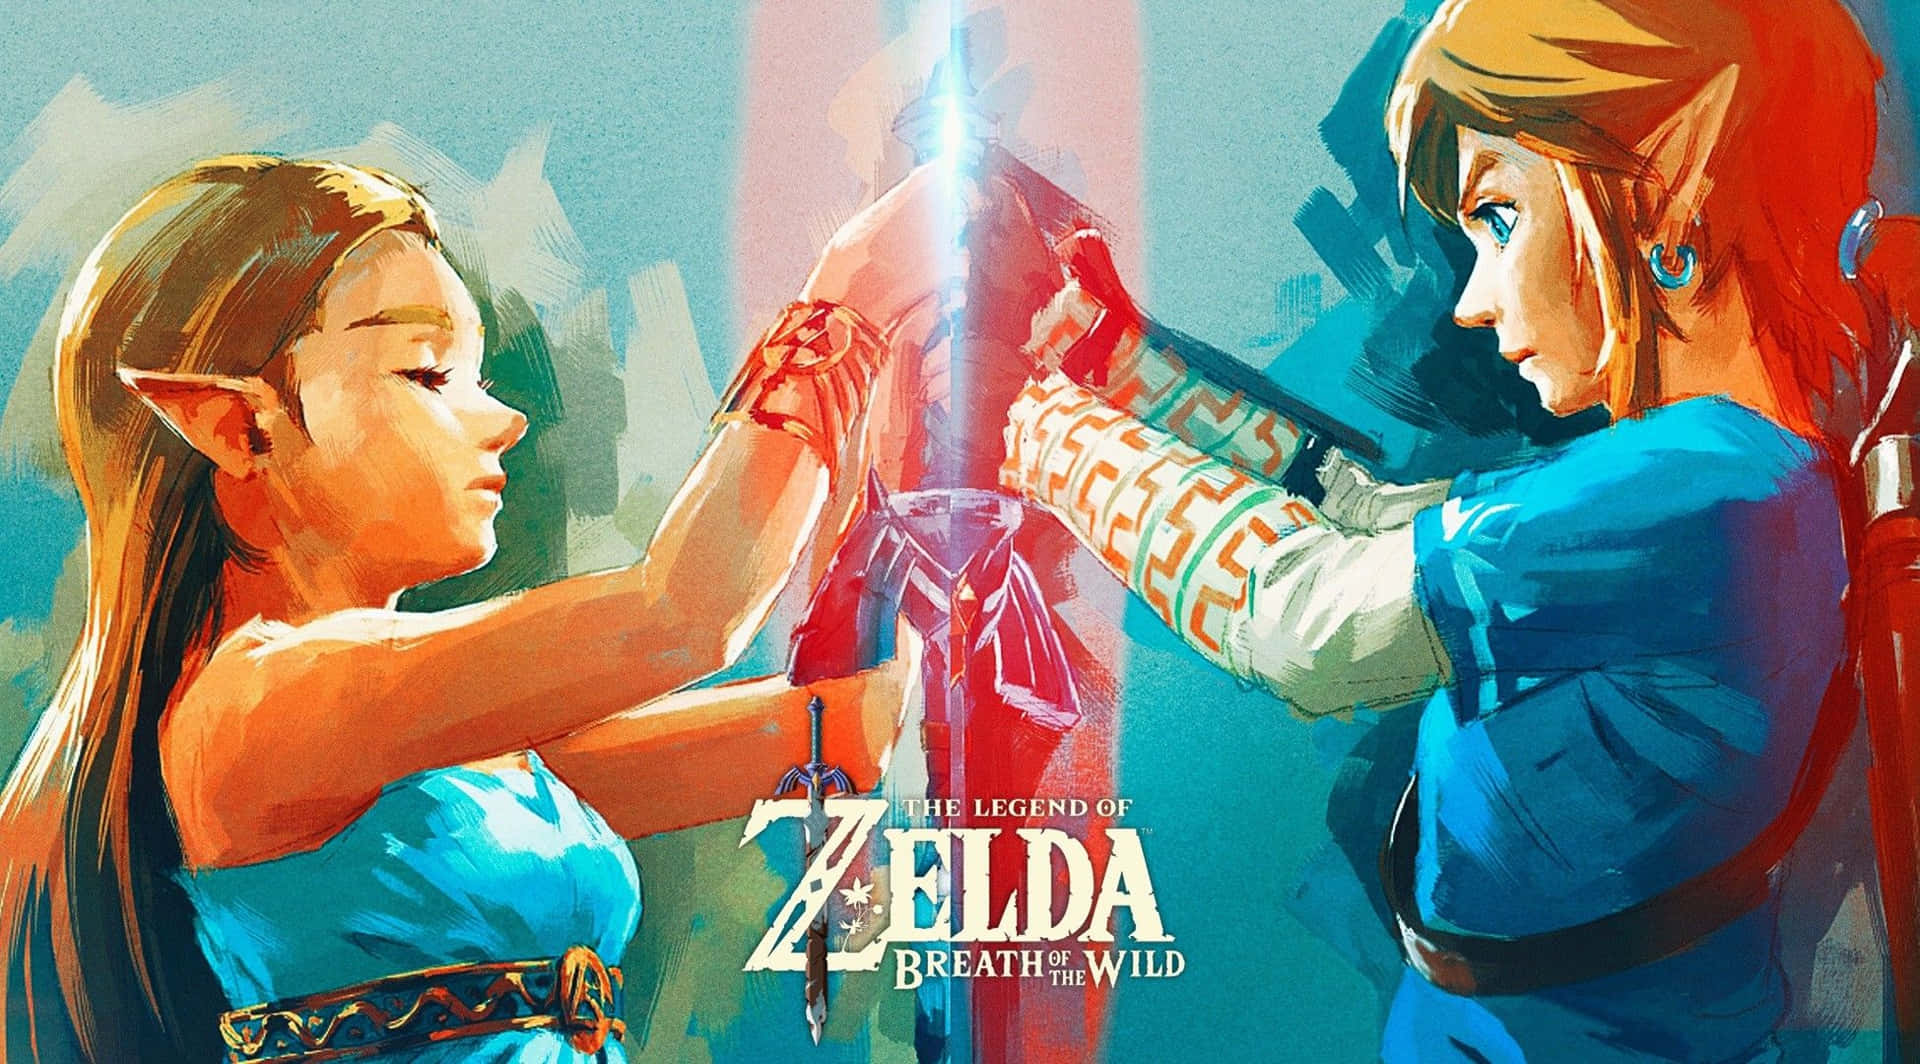 Download Princess Zelda And Link Hugging Botw Wallpaper